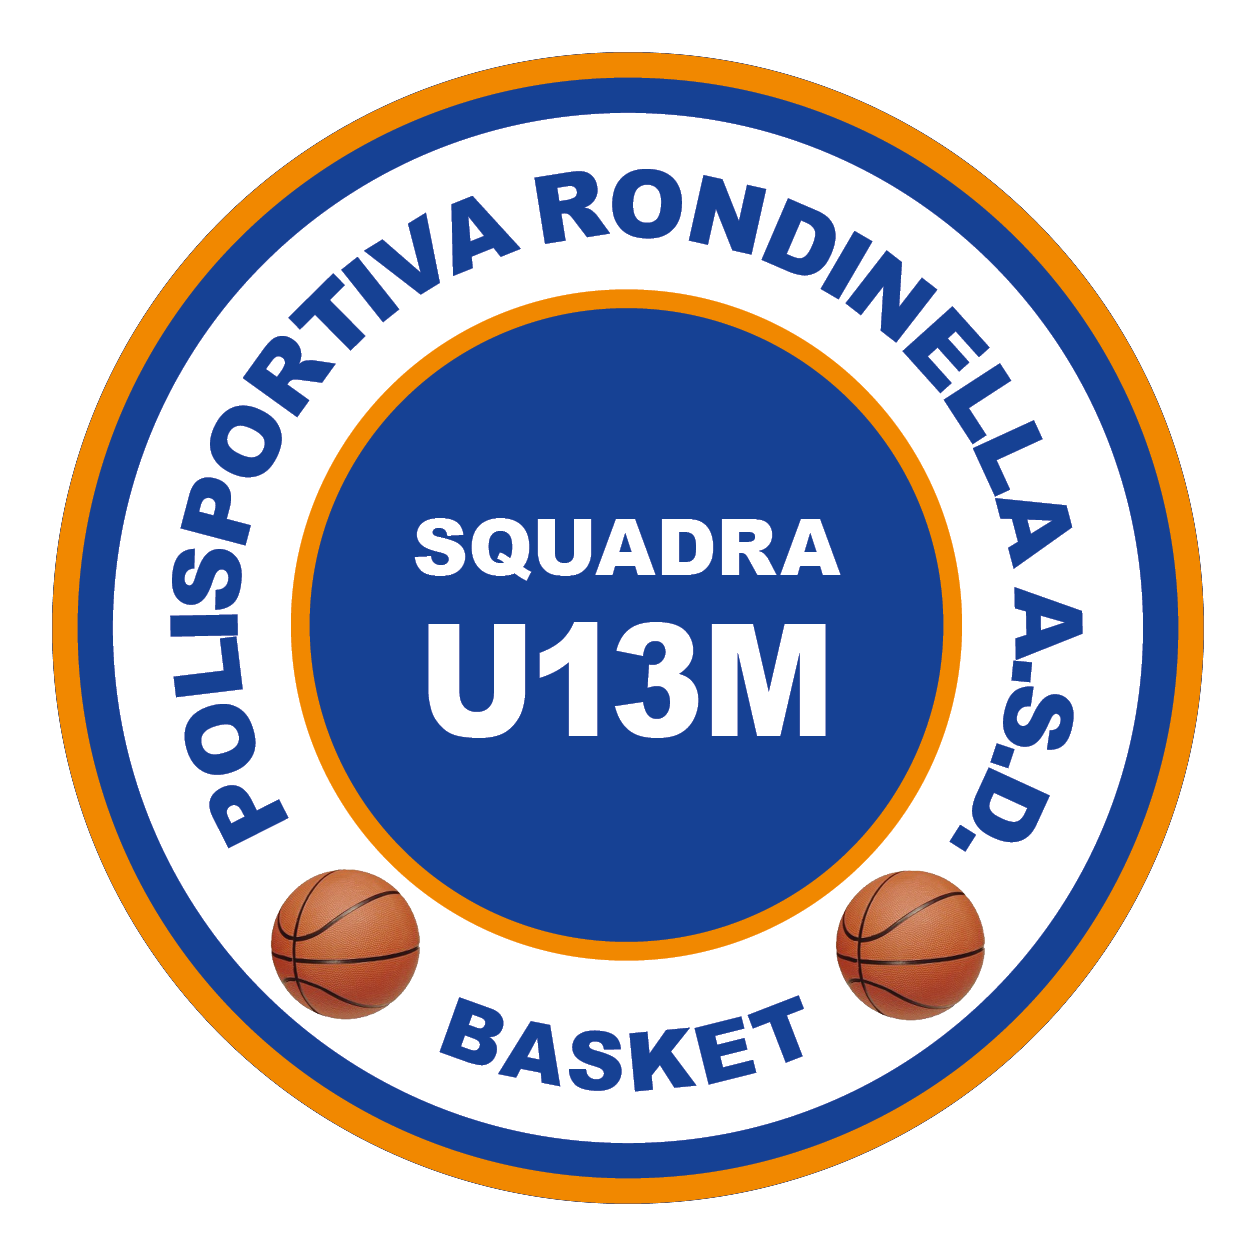 U20 - Rondinella